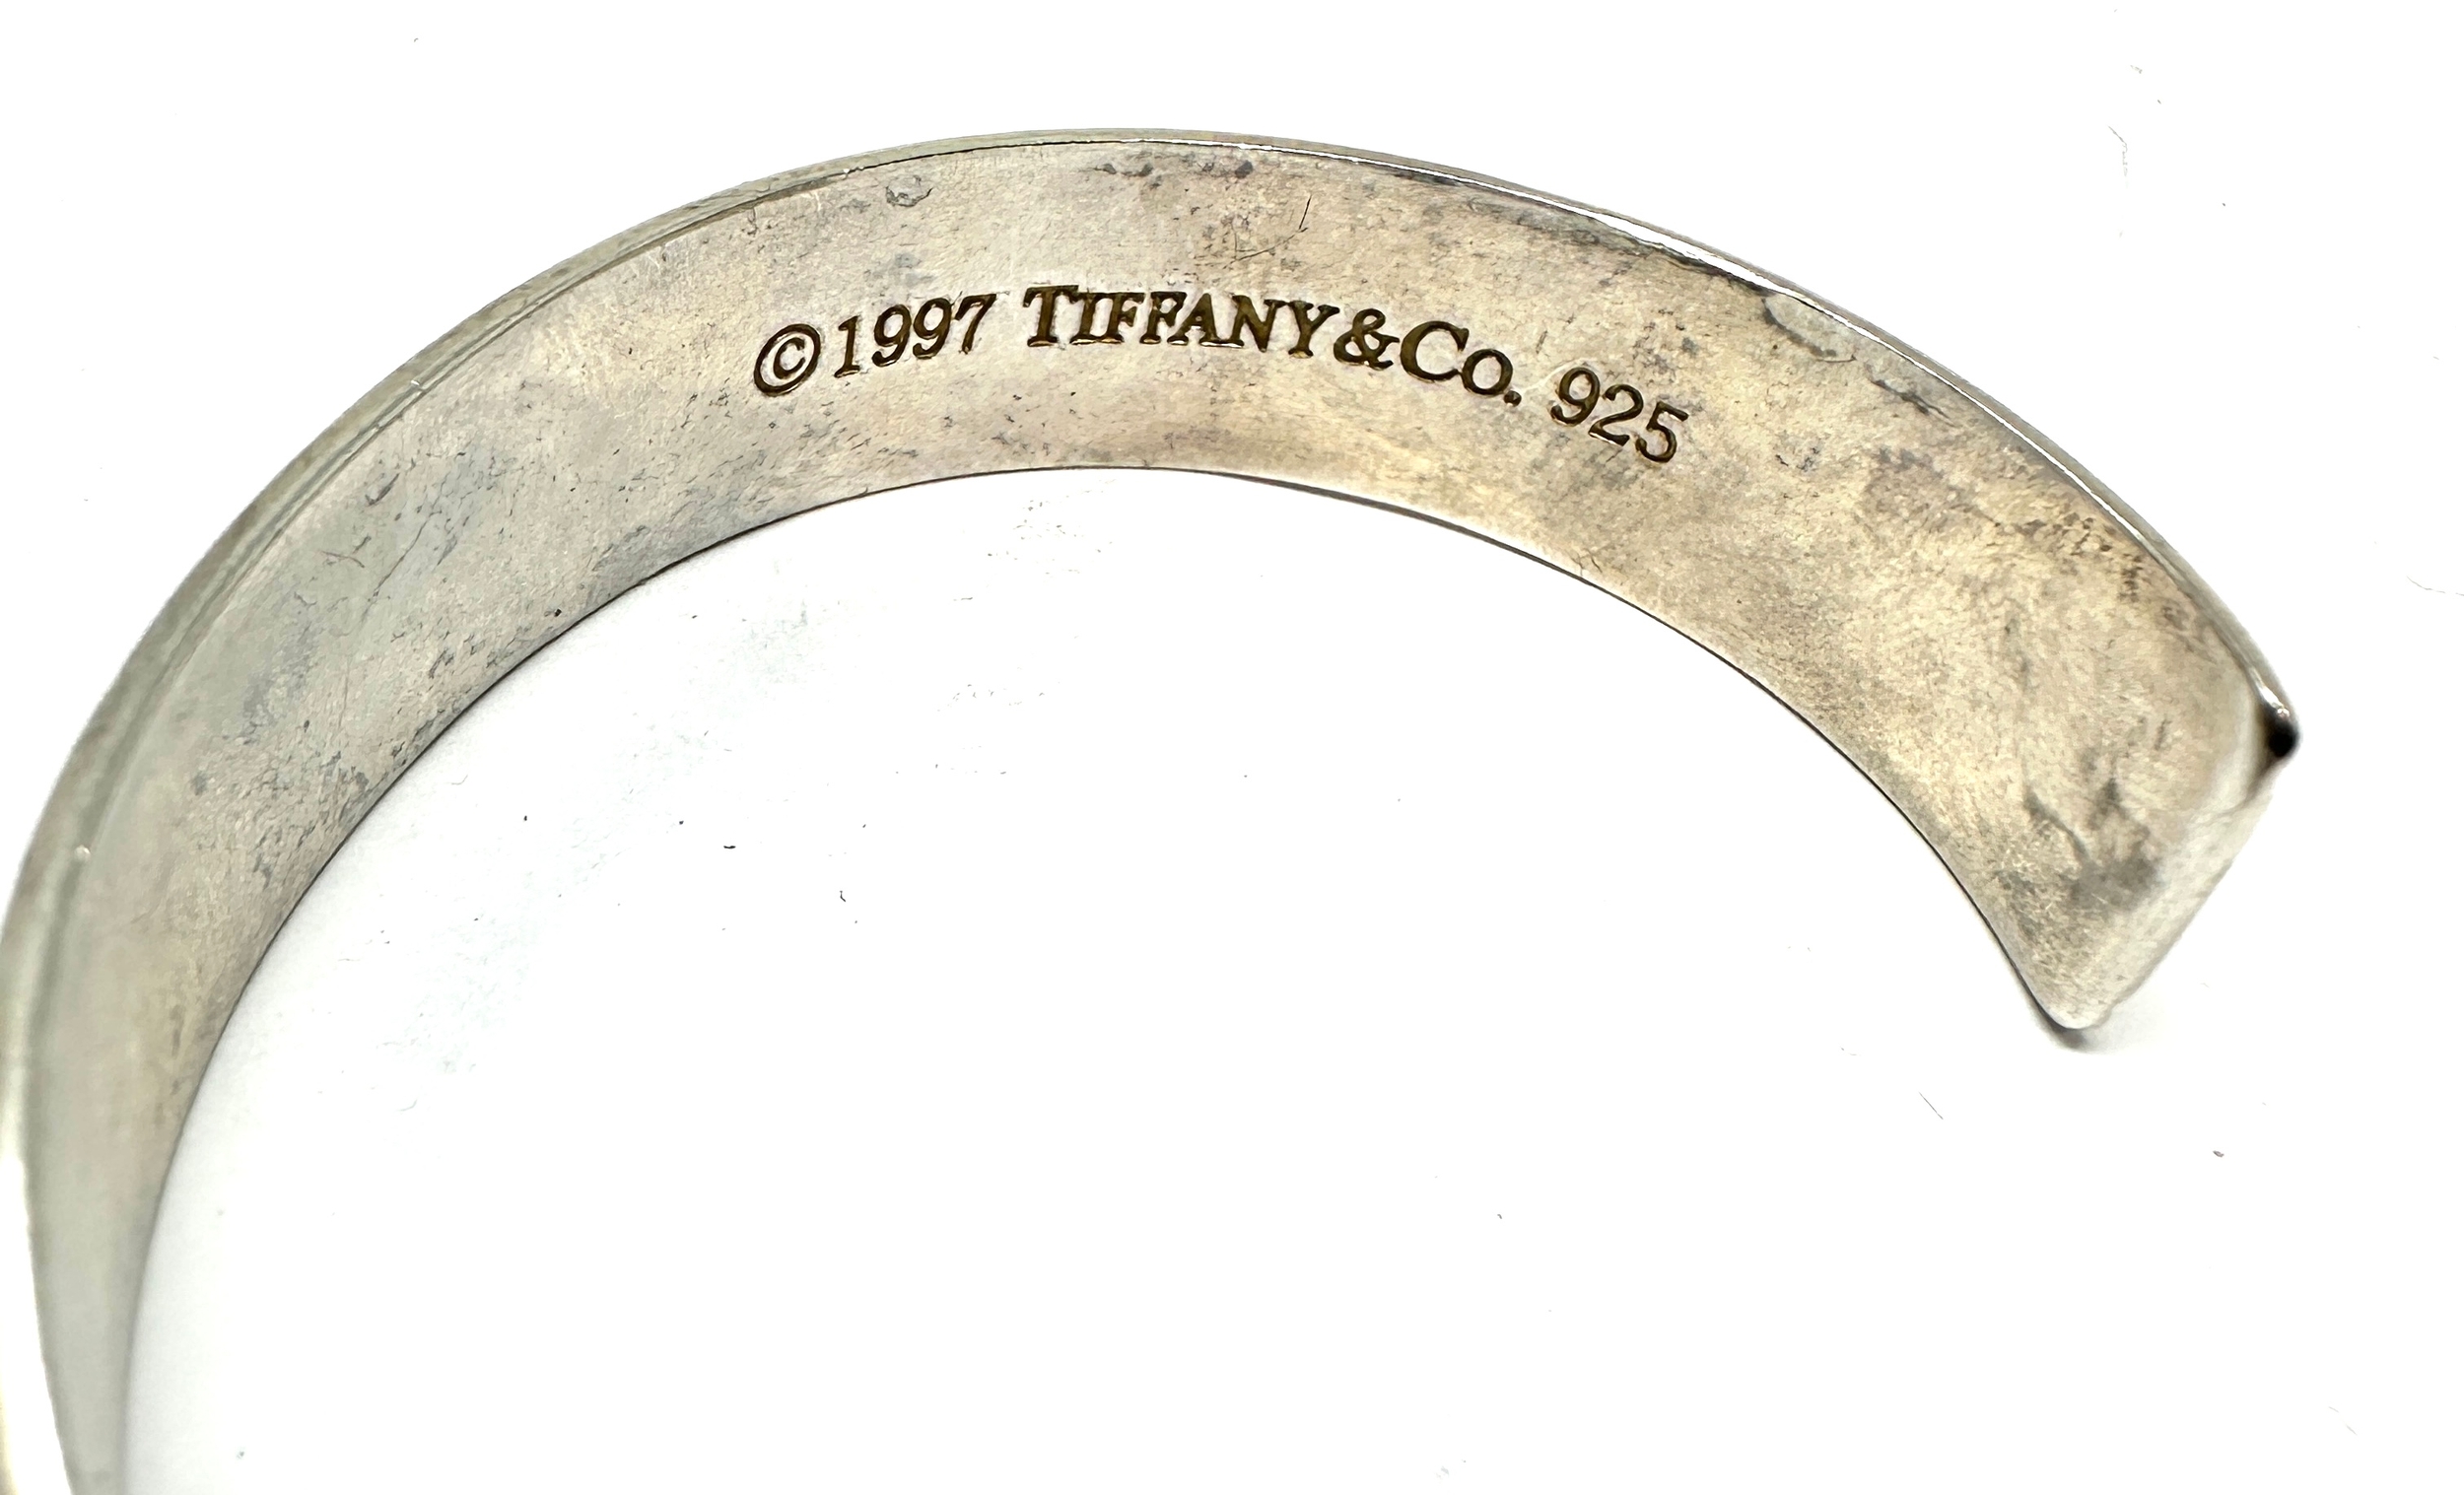 1997 925 silver tiffany atlas bracelet weight 30g - Image 3 of 4